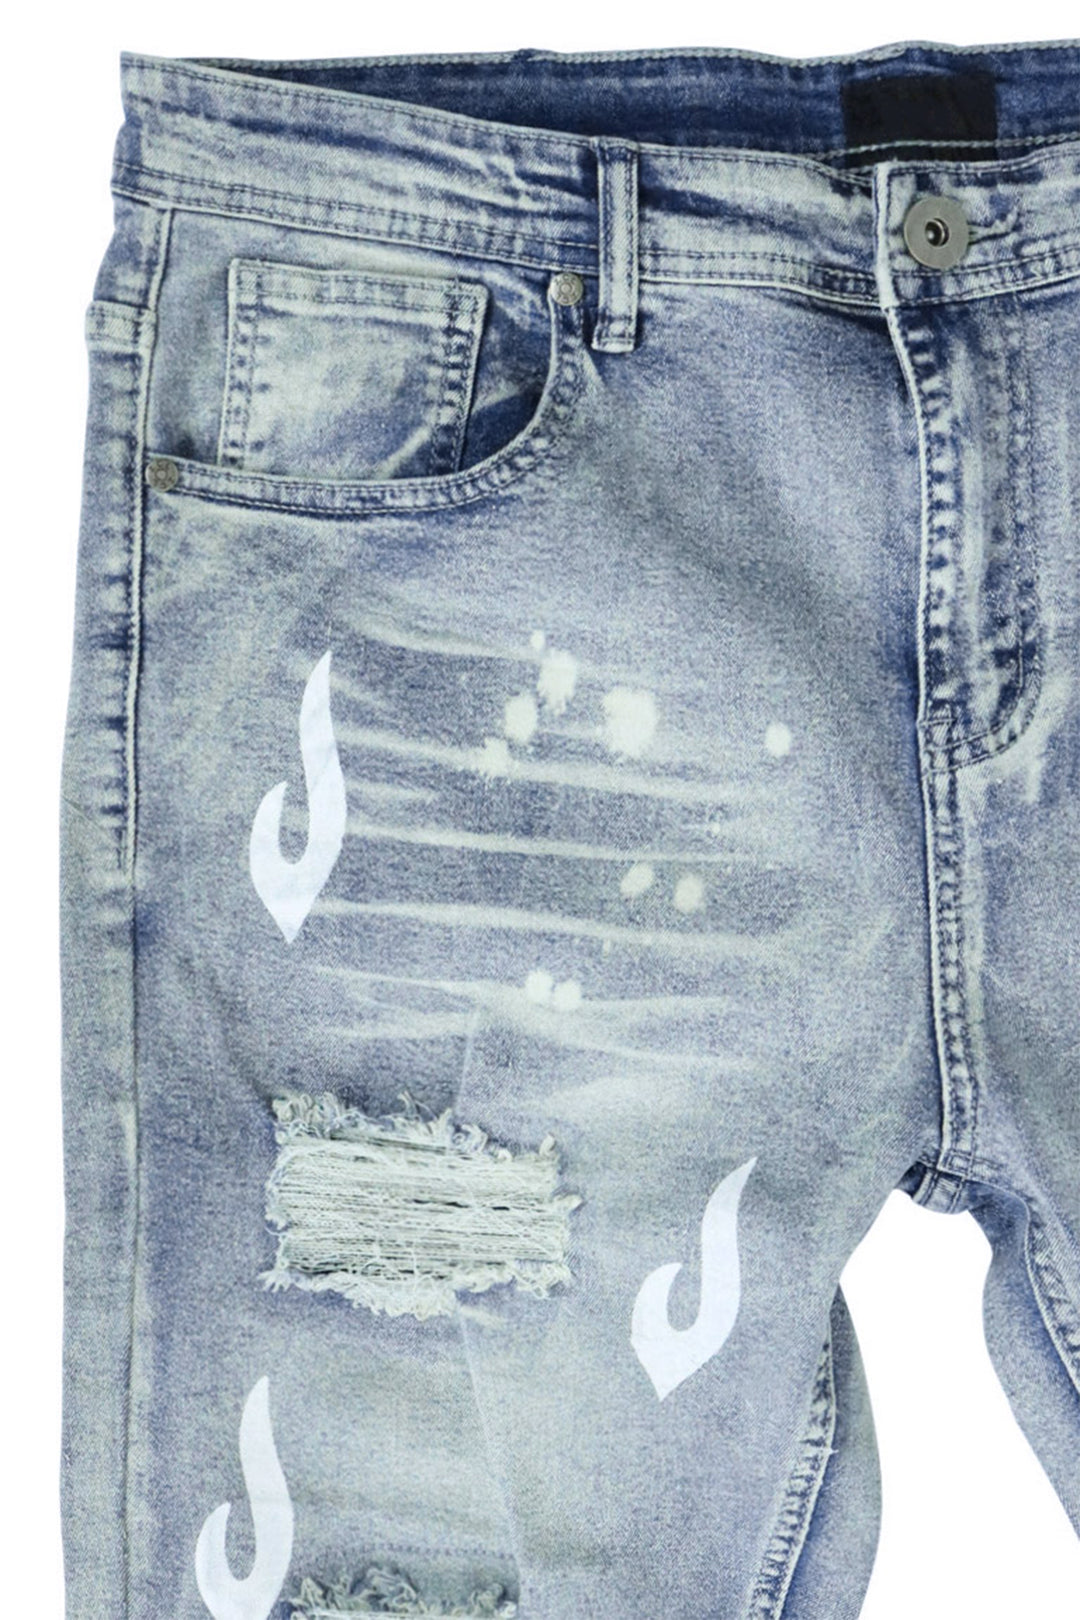 16 Jeans Men's Flame Print Jeans Snow Washed Light Blue Denim